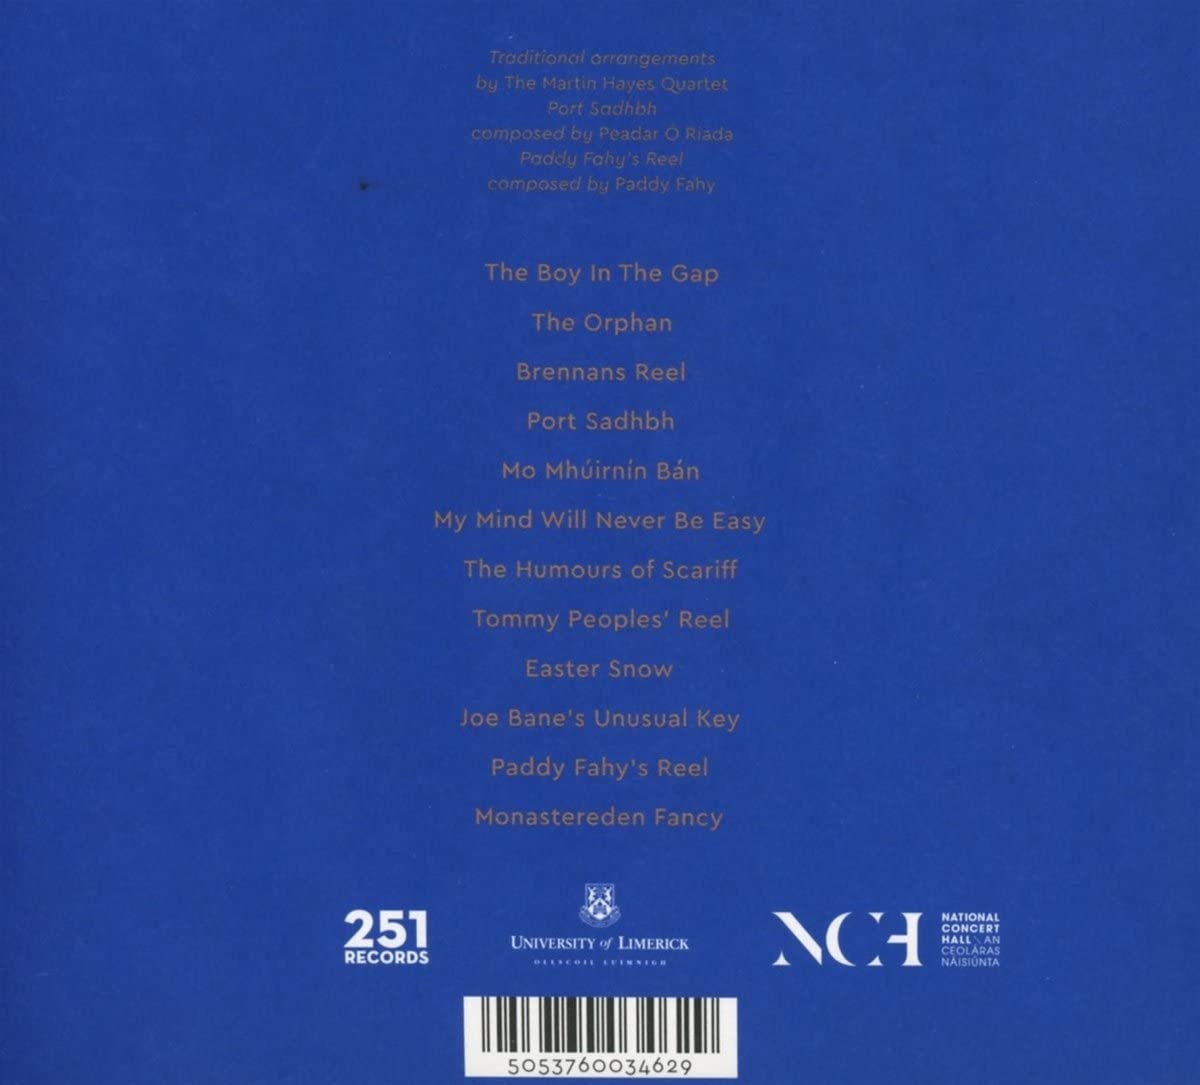 Martin Hayes Quartet - The Blue Room